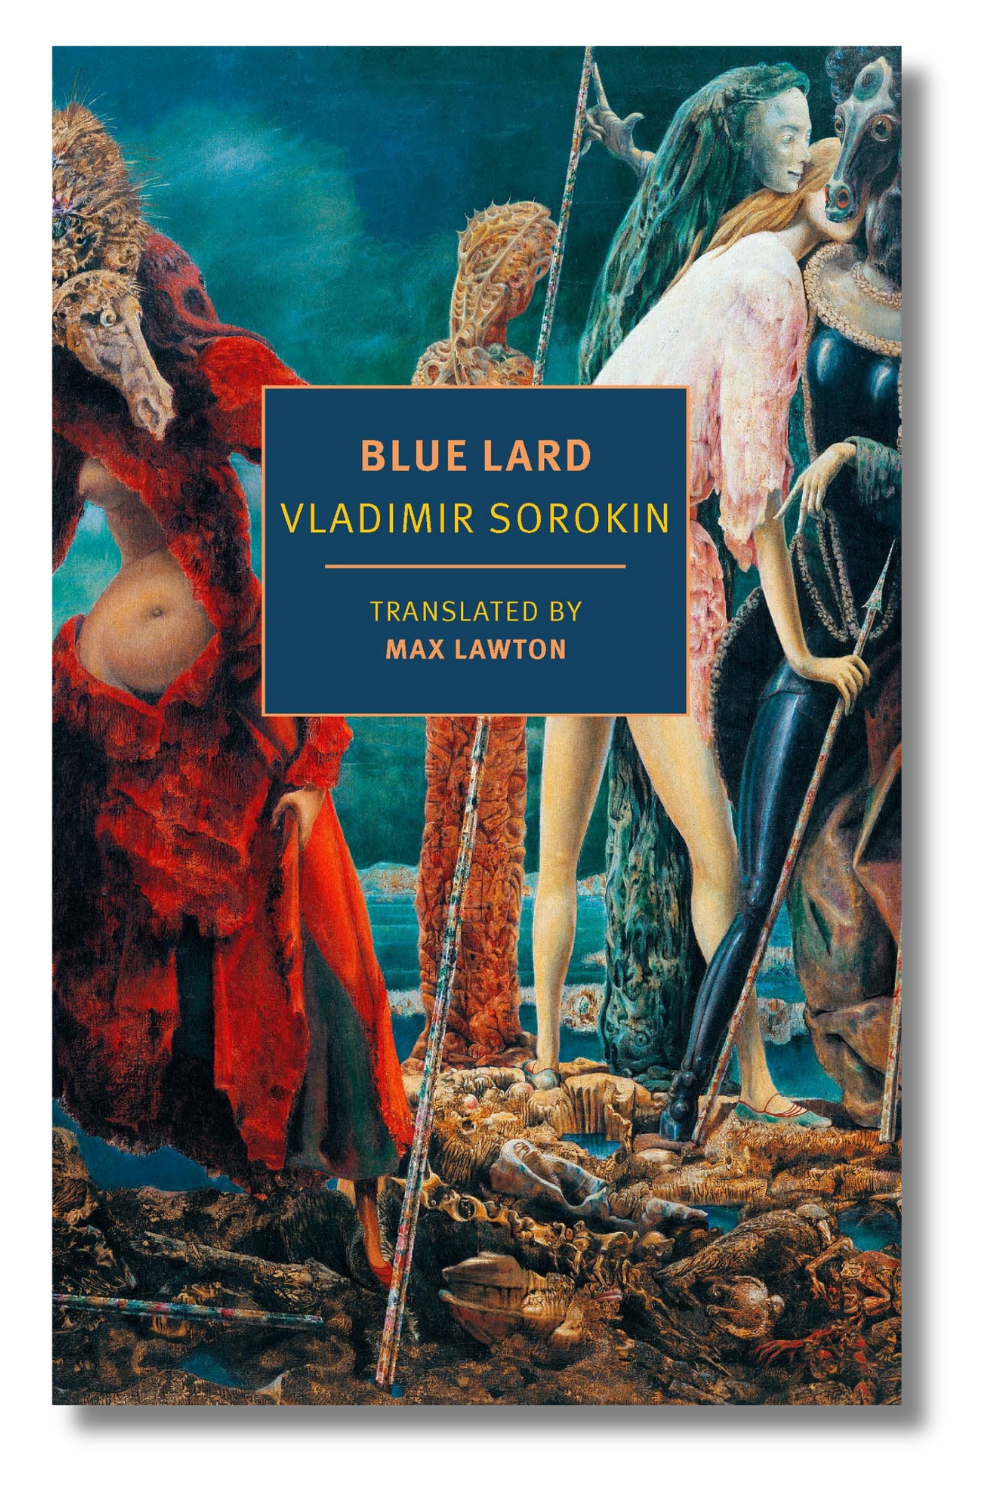 The cover of "Blue Lard" by Vladimir Sorokin, tr. by Max Lawton